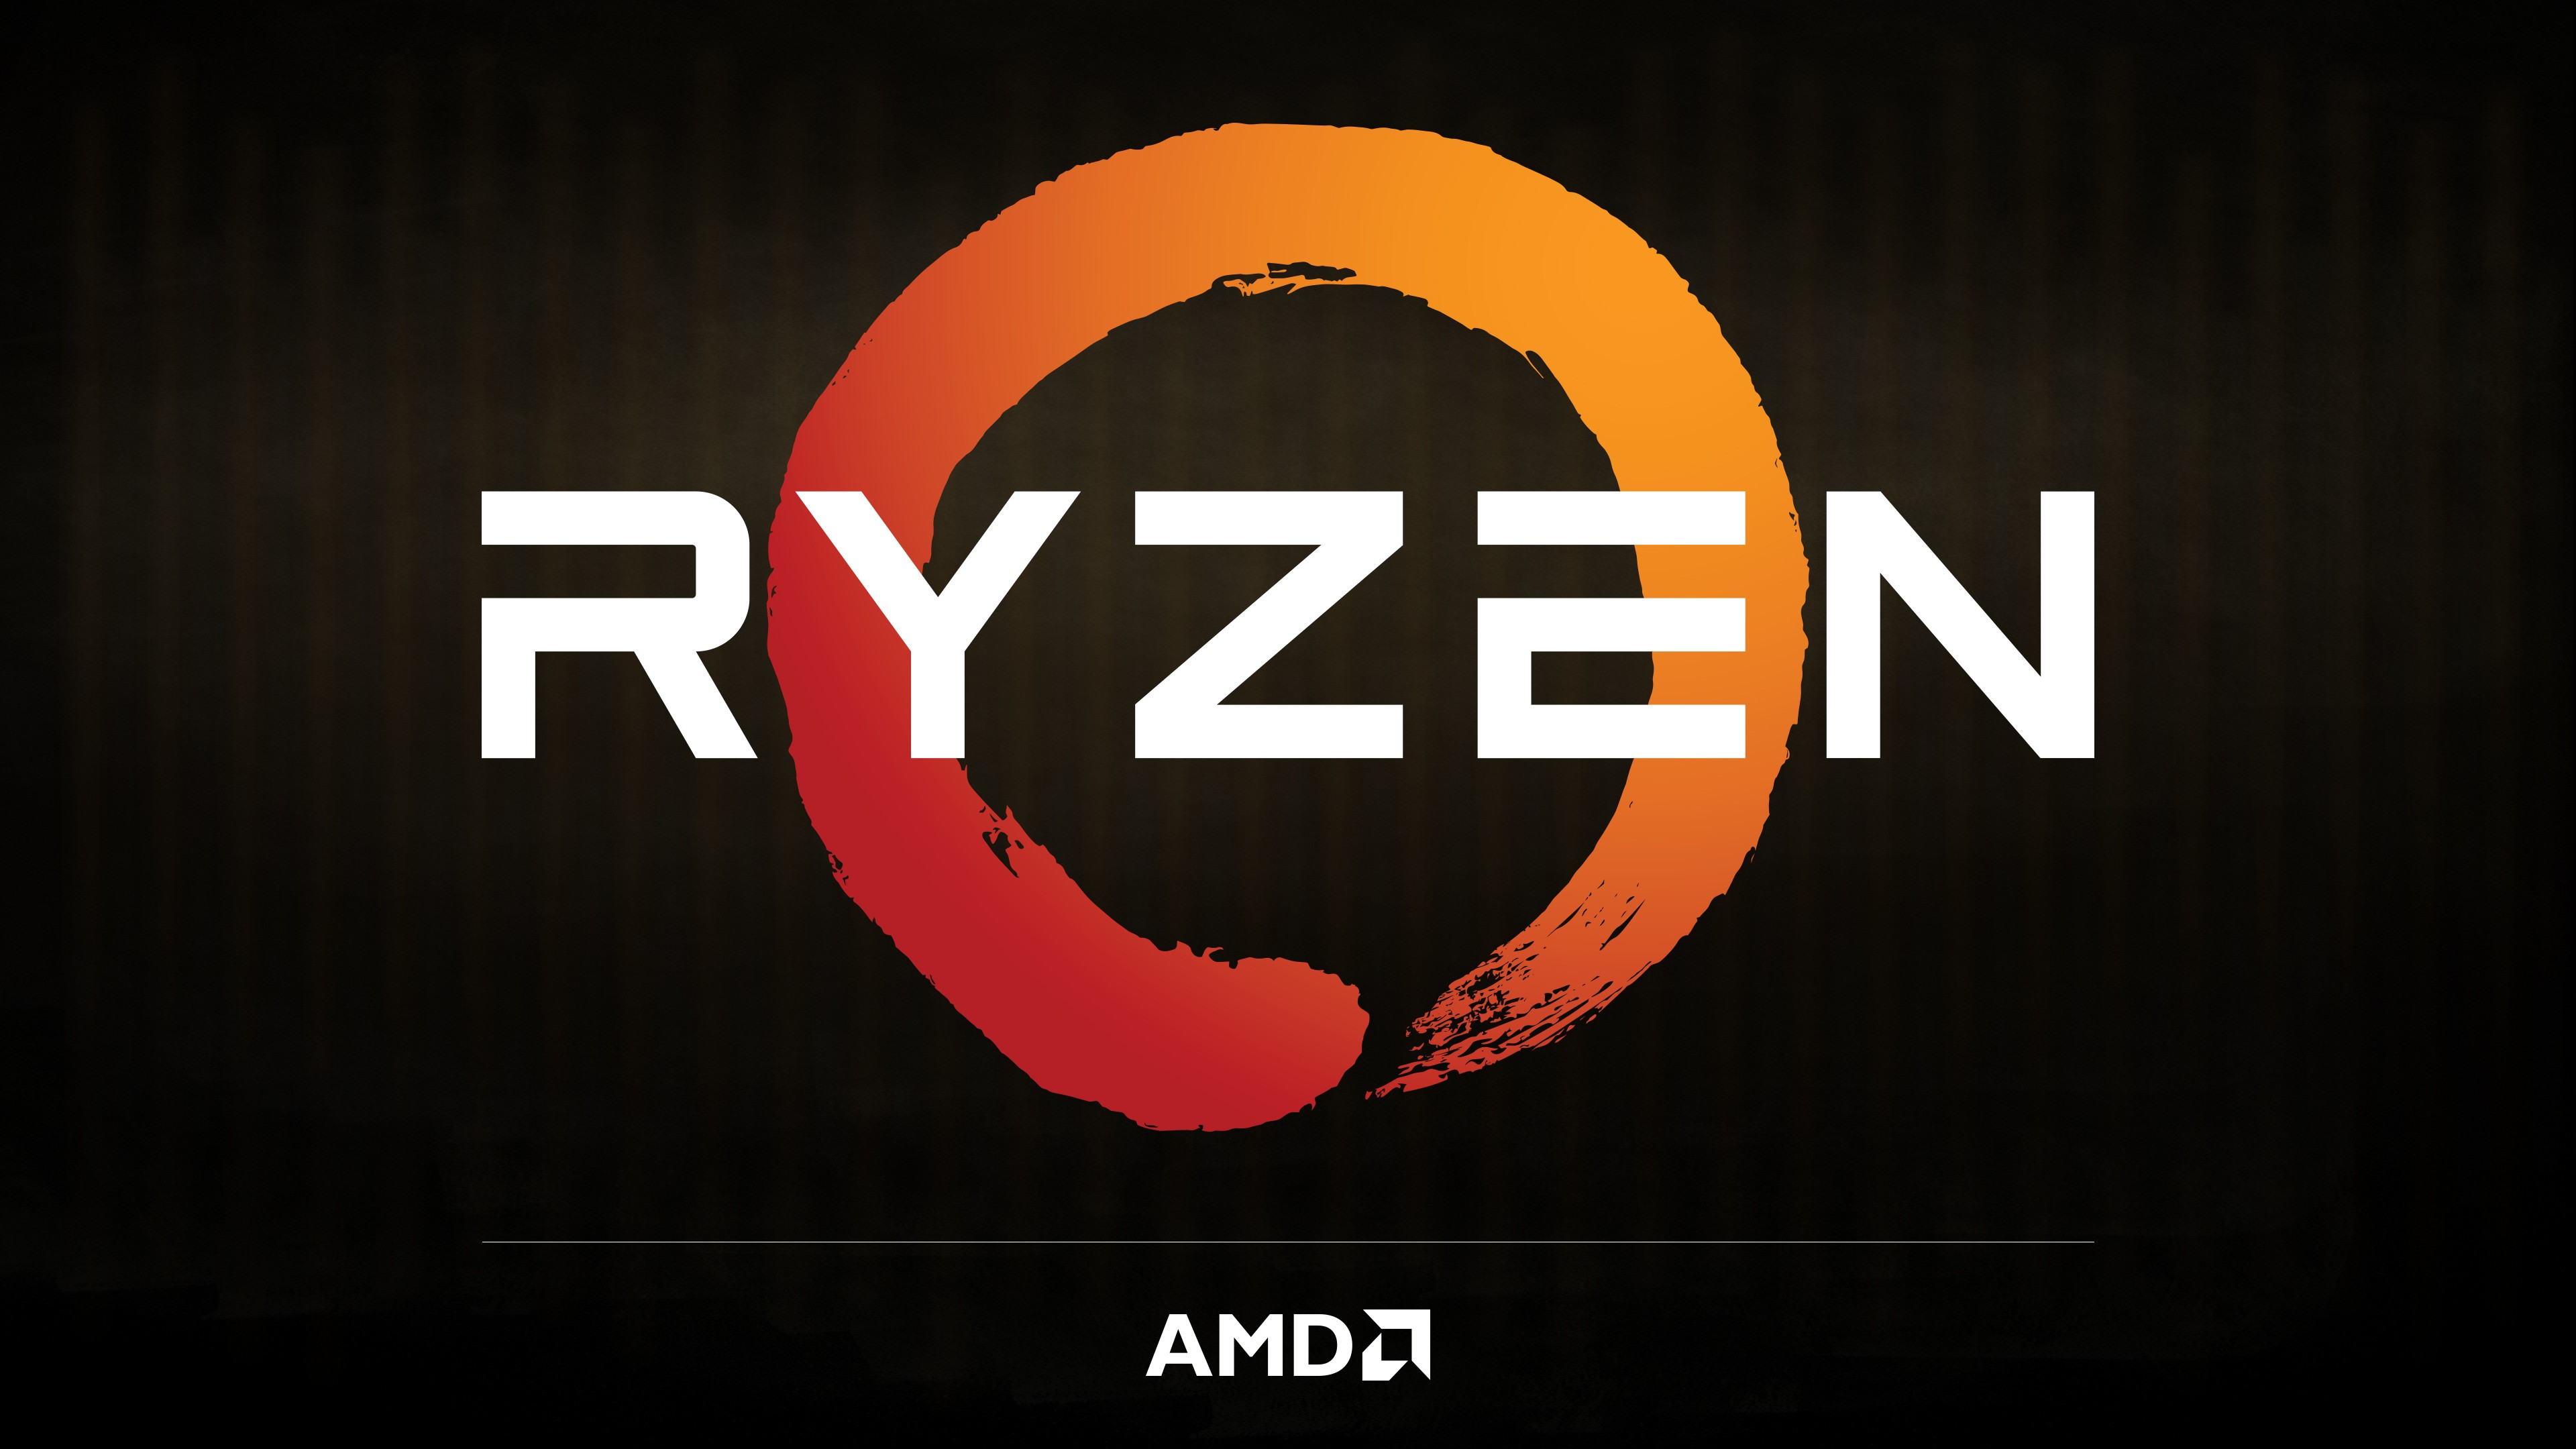 AMD, RYZEN Wallpapers HD / Desktop and Mobile Backgrounds